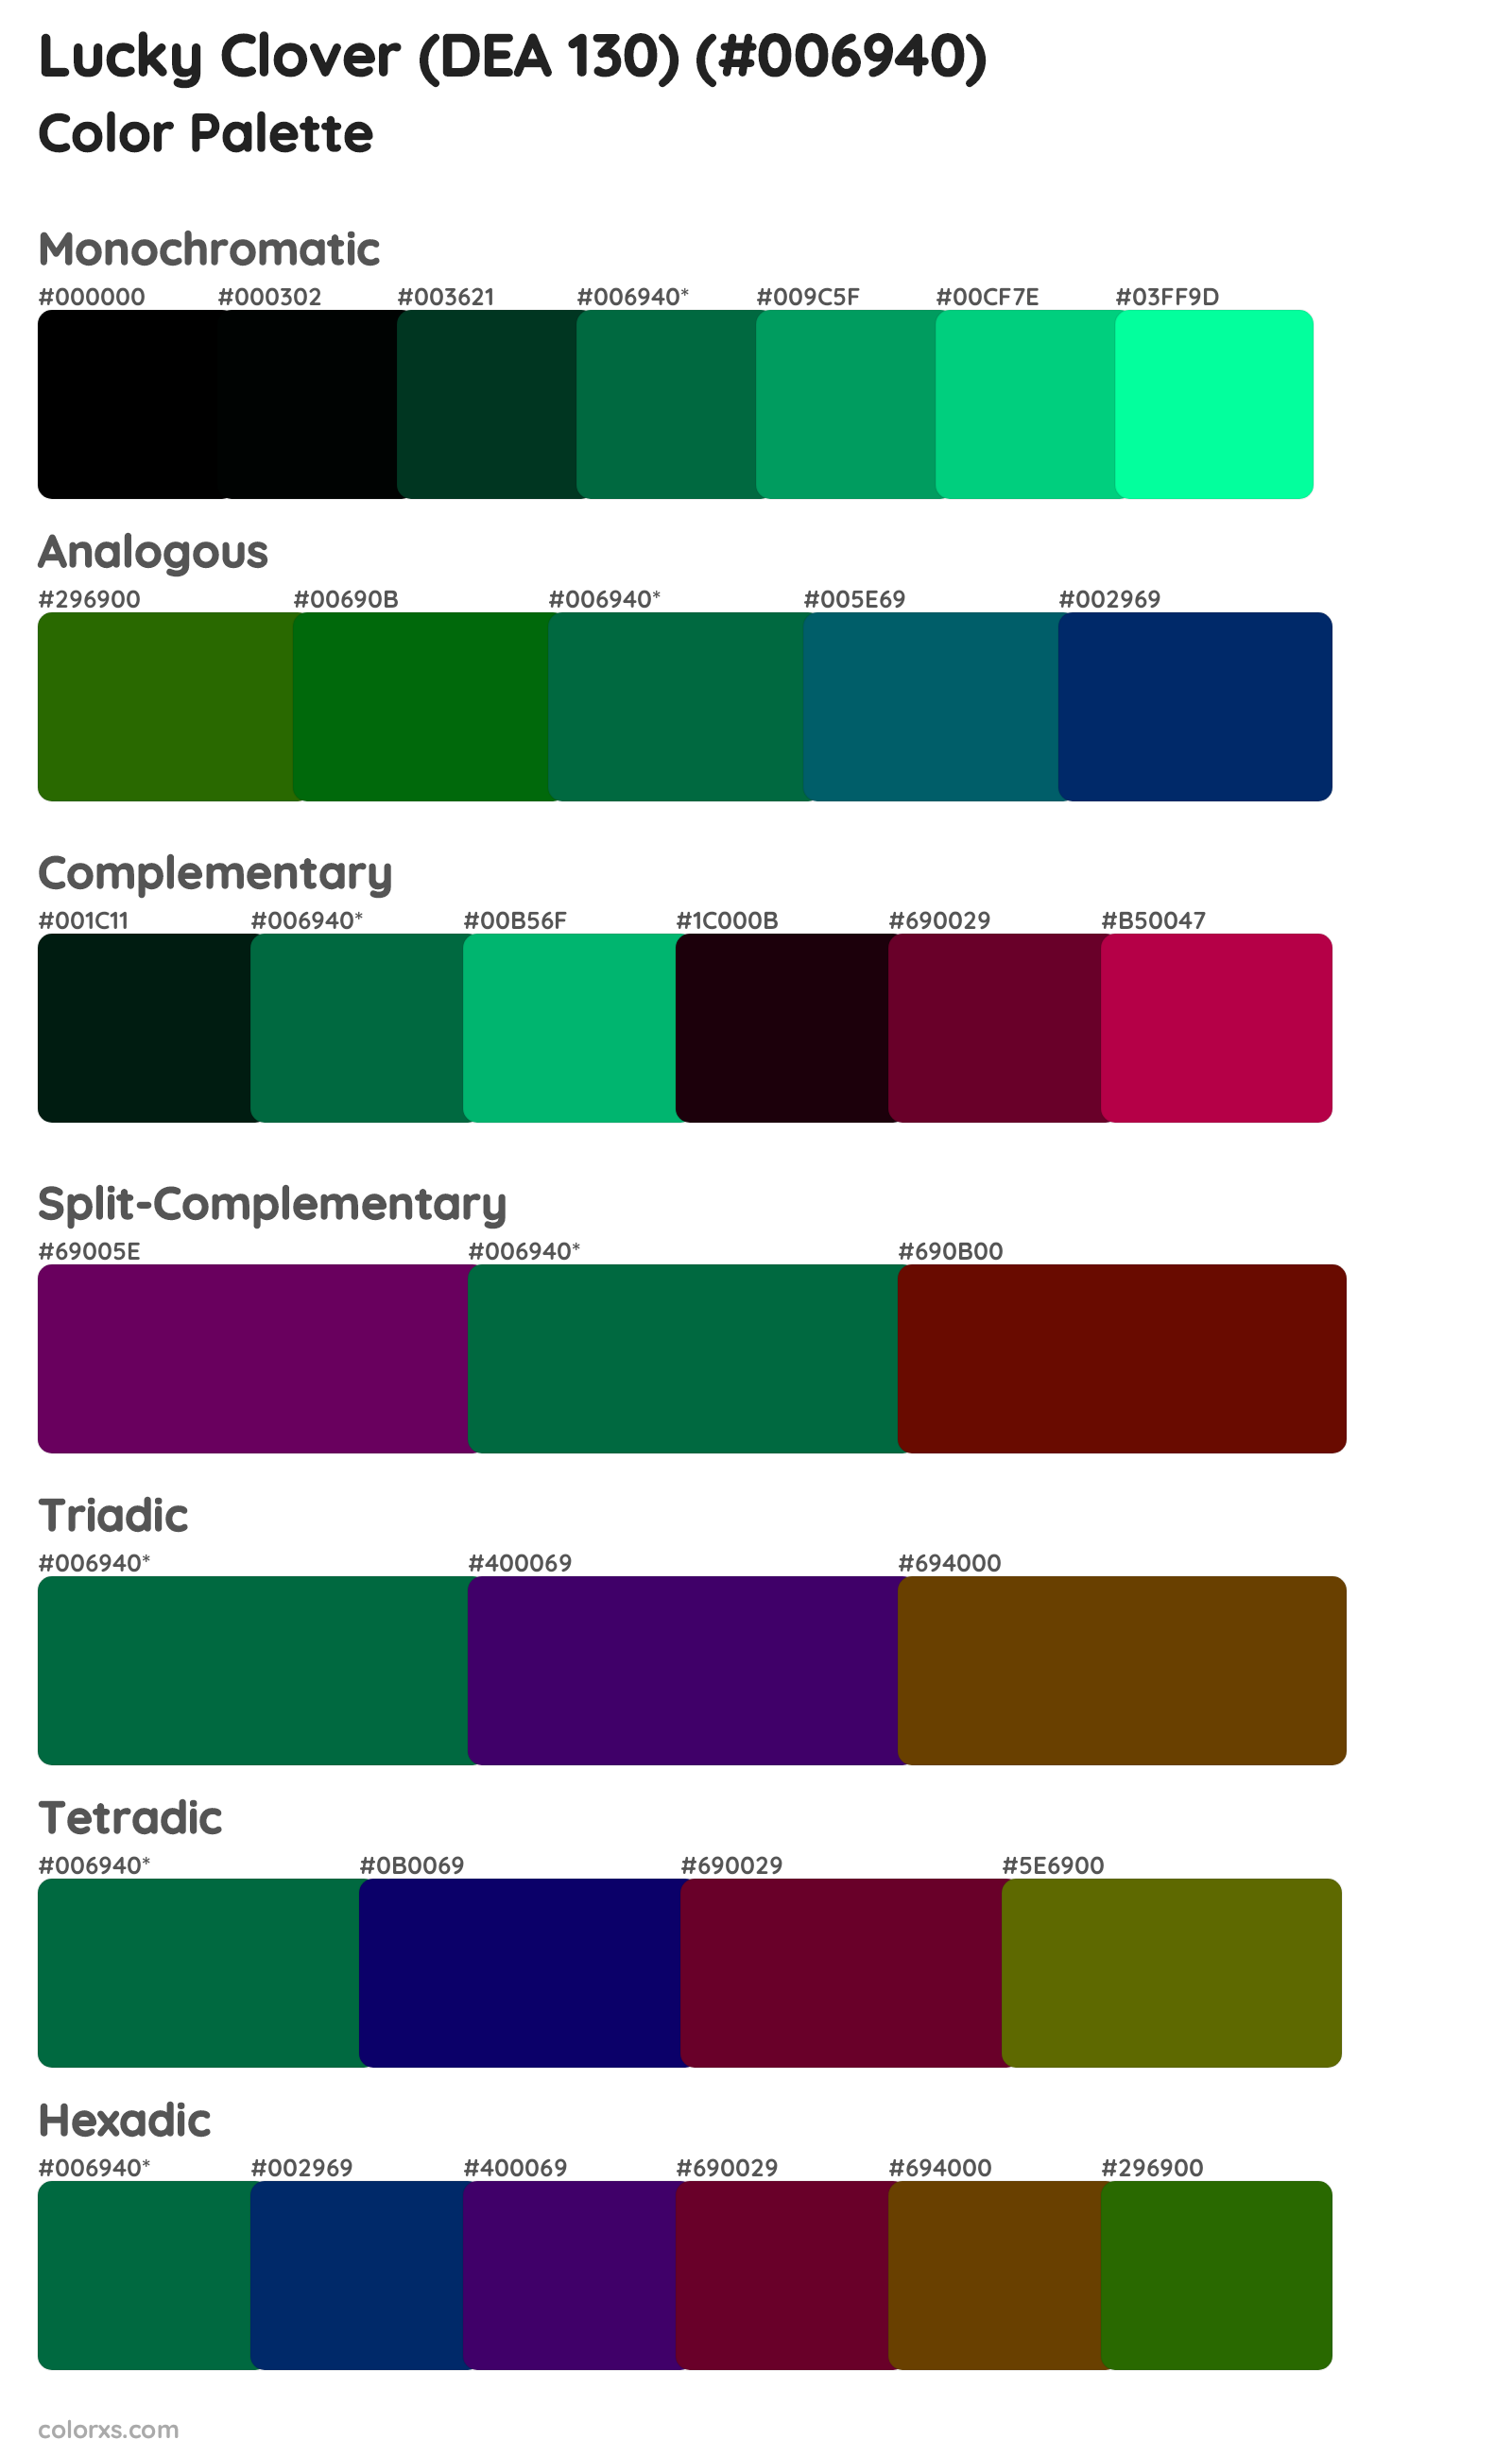 Lucky Clover (DEA 130) Color Scheme Palettes